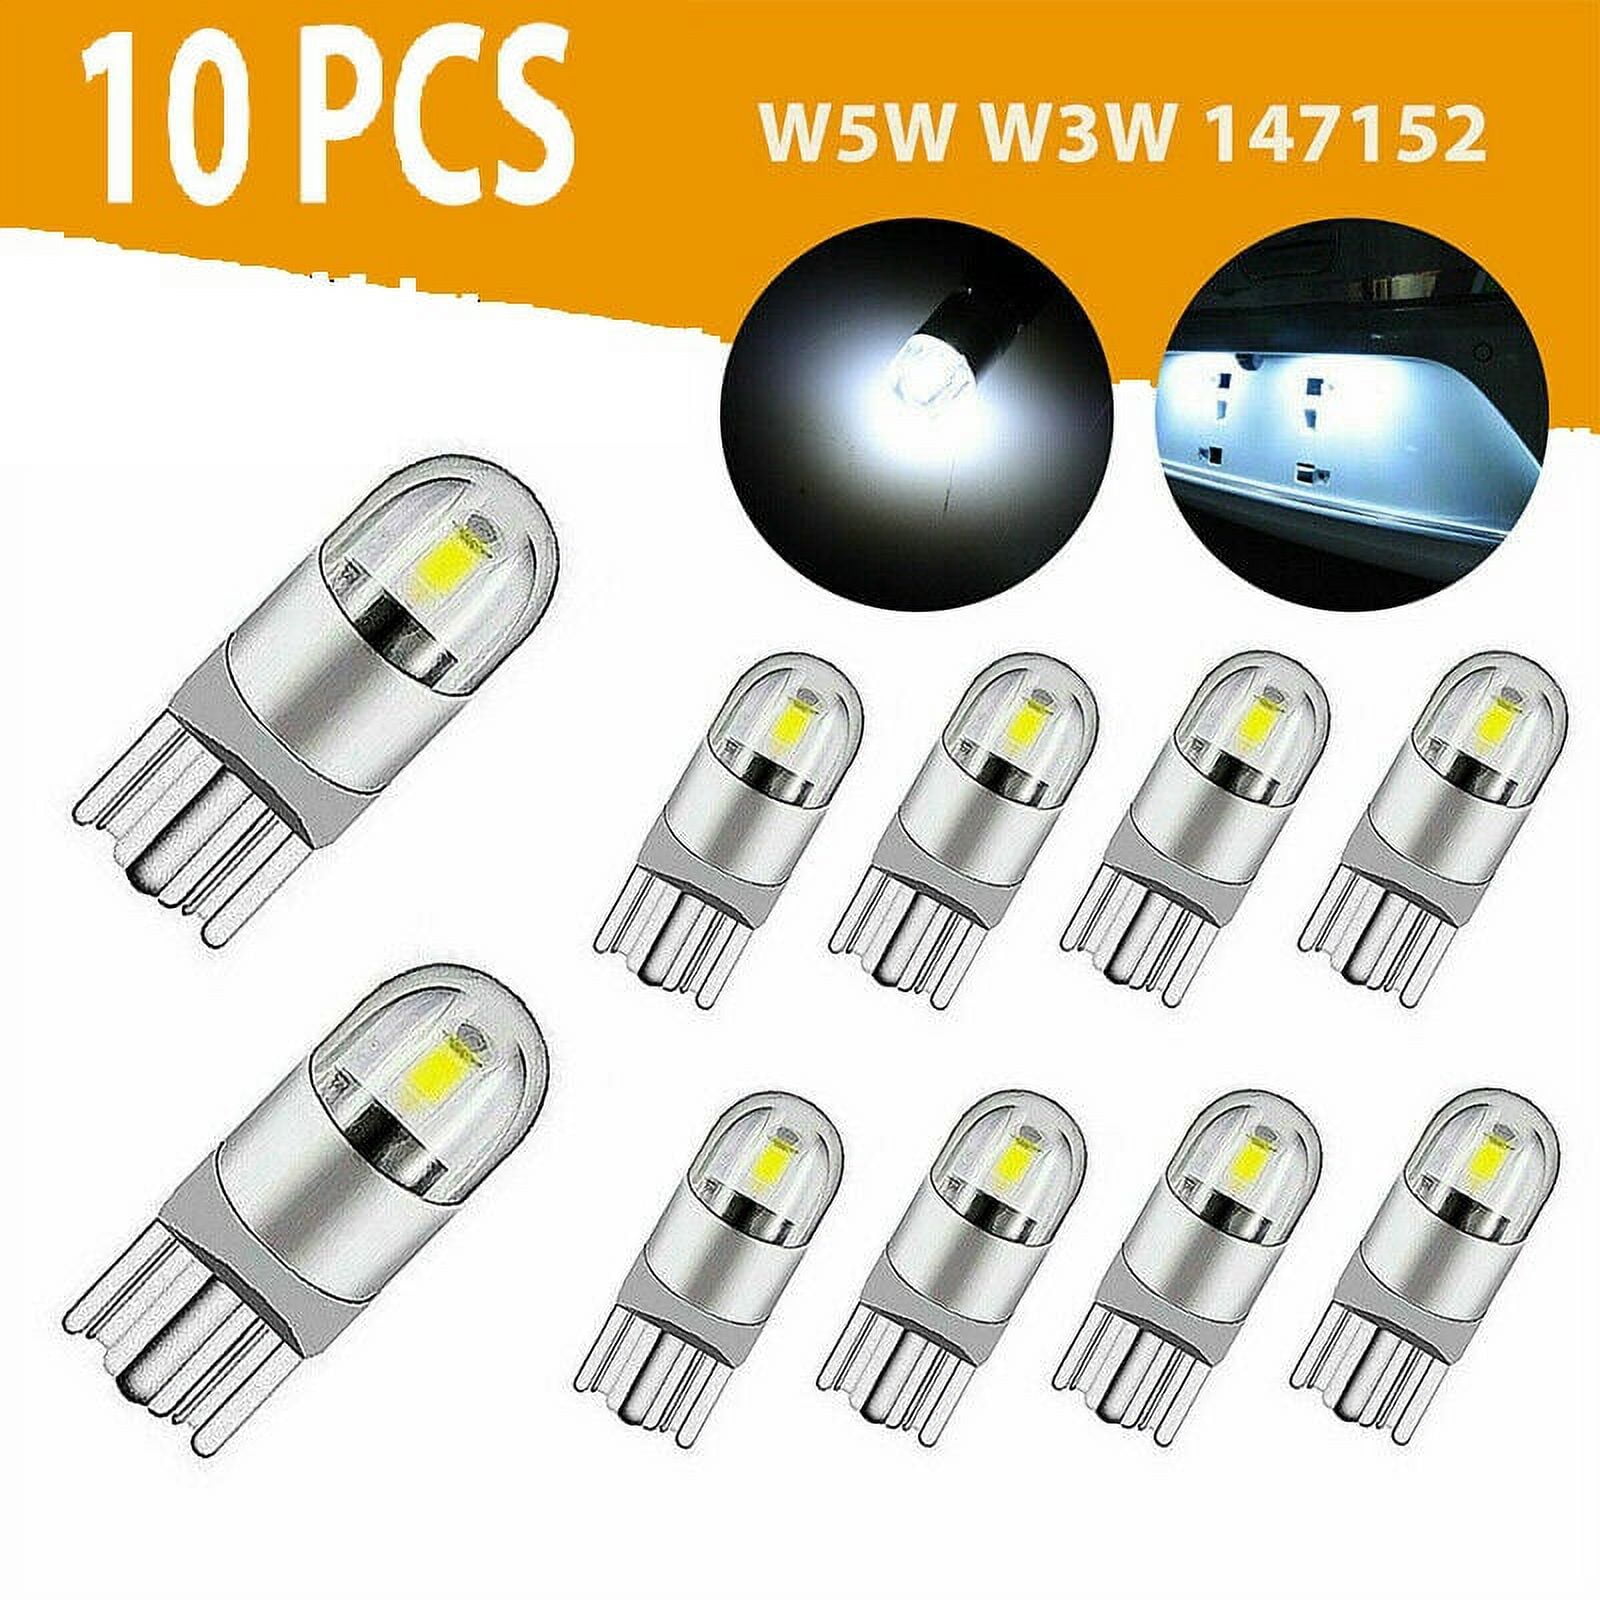  iDlumina T10 W5W 168 194 12V 6500K Pure White Canbus Error Free  LED Car Light Bulb 6X5730SMD (Pack of 2) : Automotive